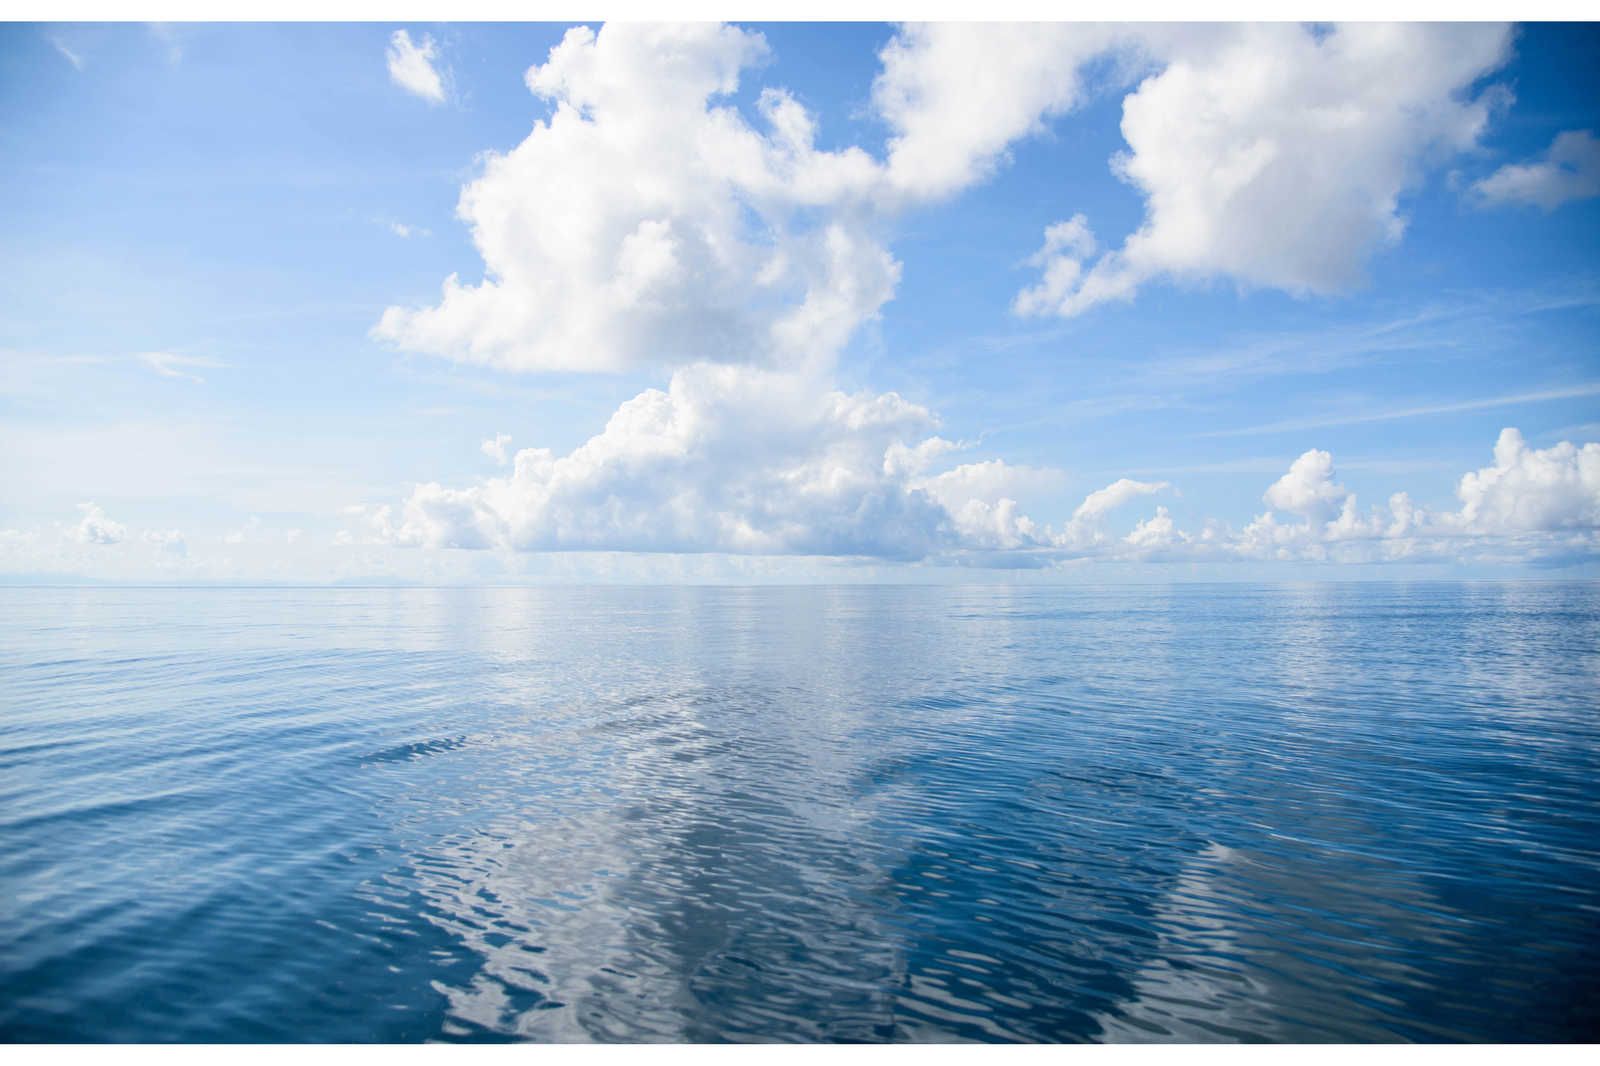             Lienzo mar abierto con nubes - 0,90 m x 0,60 m
        